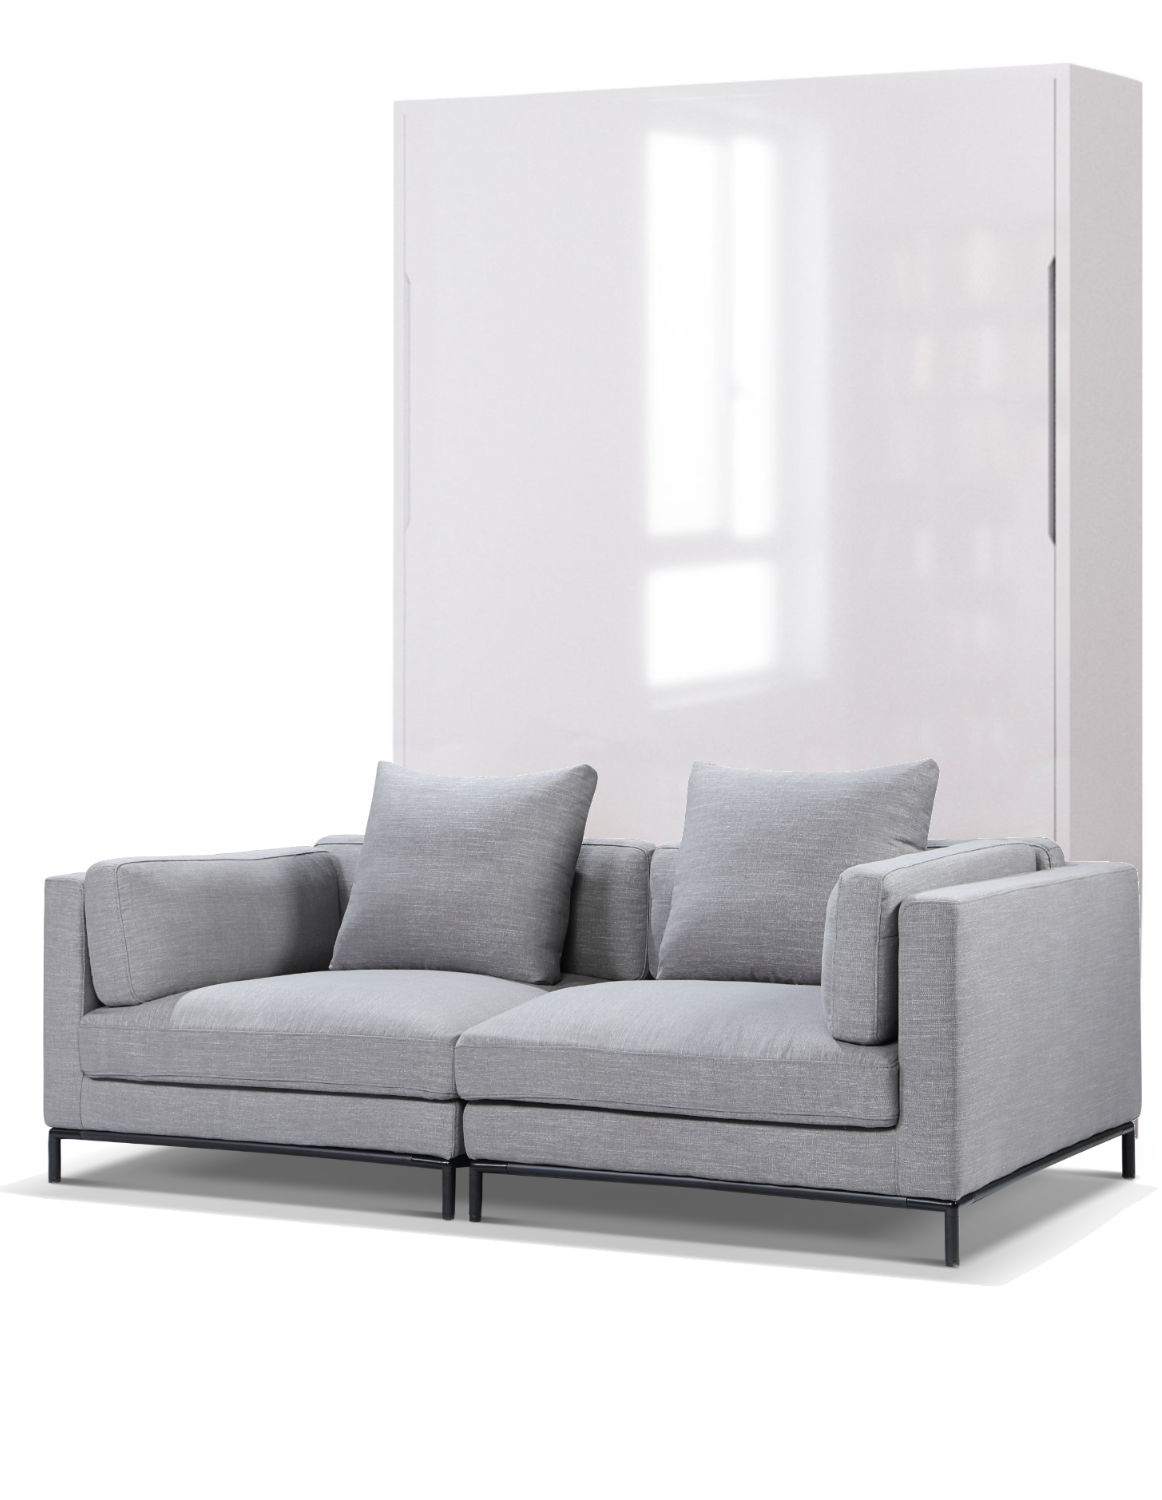 Puro al límite accesorios MurphySofa Migliore: 2 Seat sofa in Fabric - Expand Furniture - Folding  Tables, Smarter Wall Beds, Space Savers